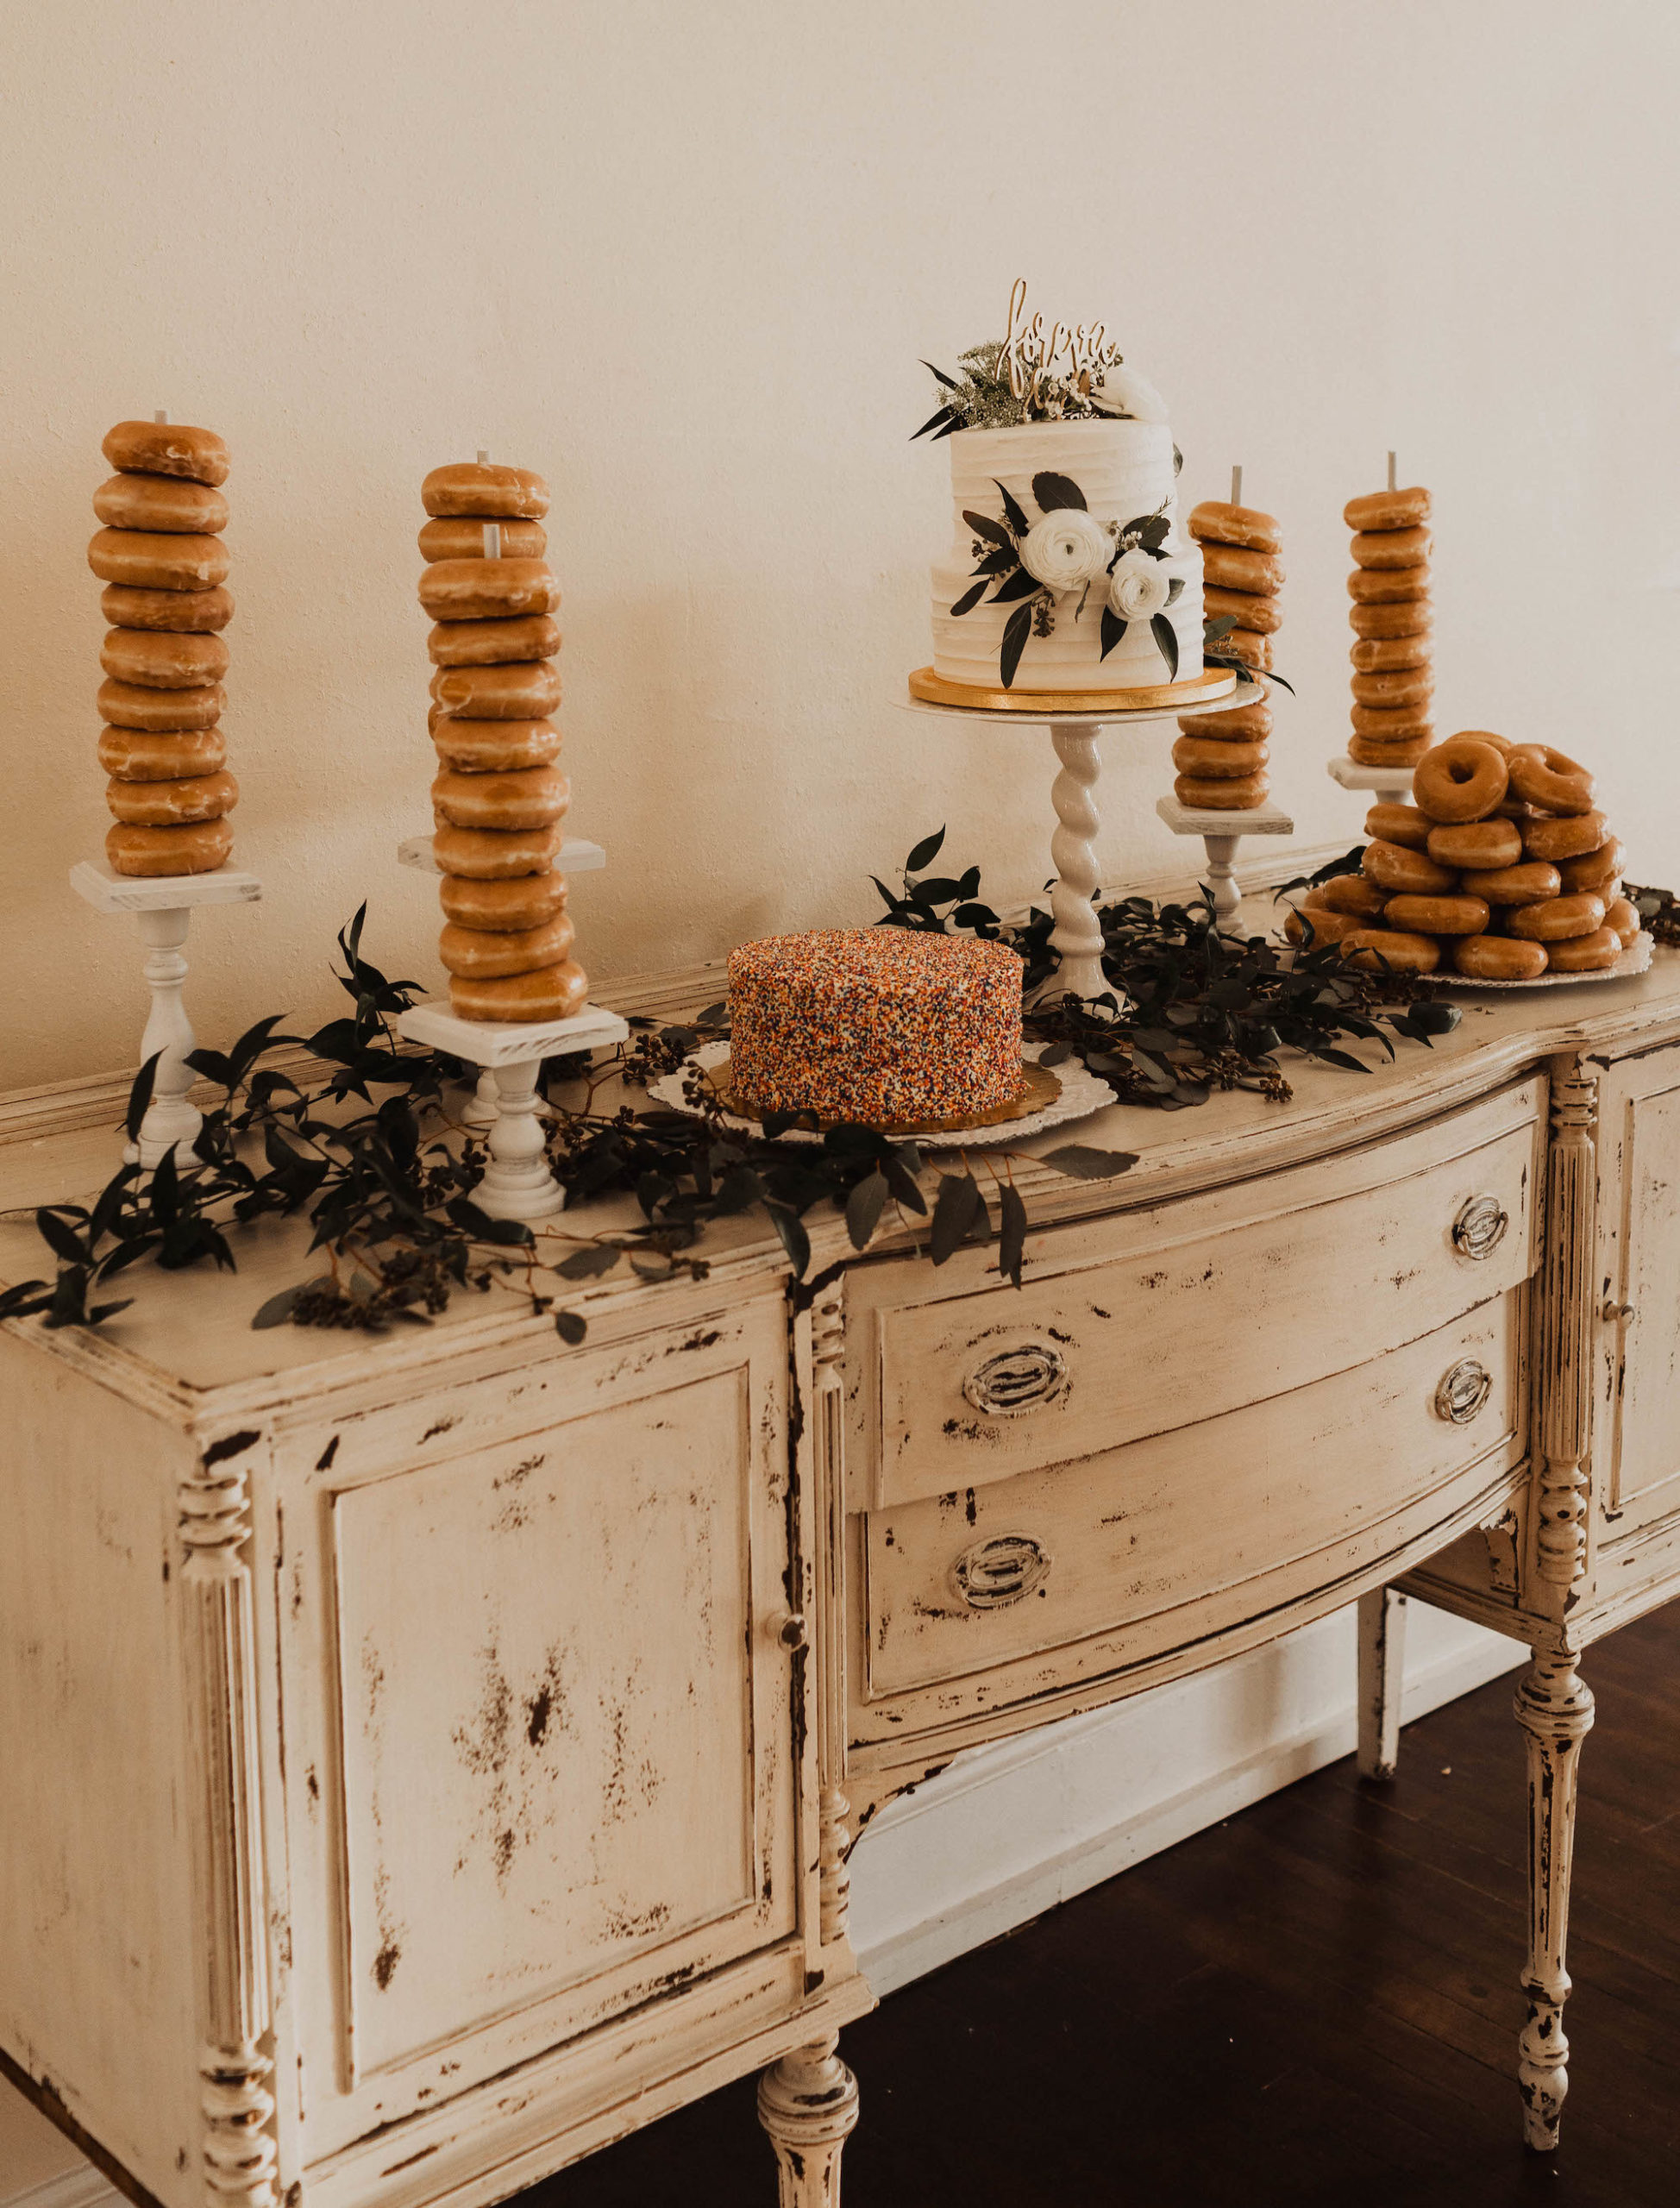 Antique White Dresser Dessert Table Setup, Krispy Kreme Donuts on Spindles, Two Tier White Ruffled Wedding Cake with Roses and Eucalyptus